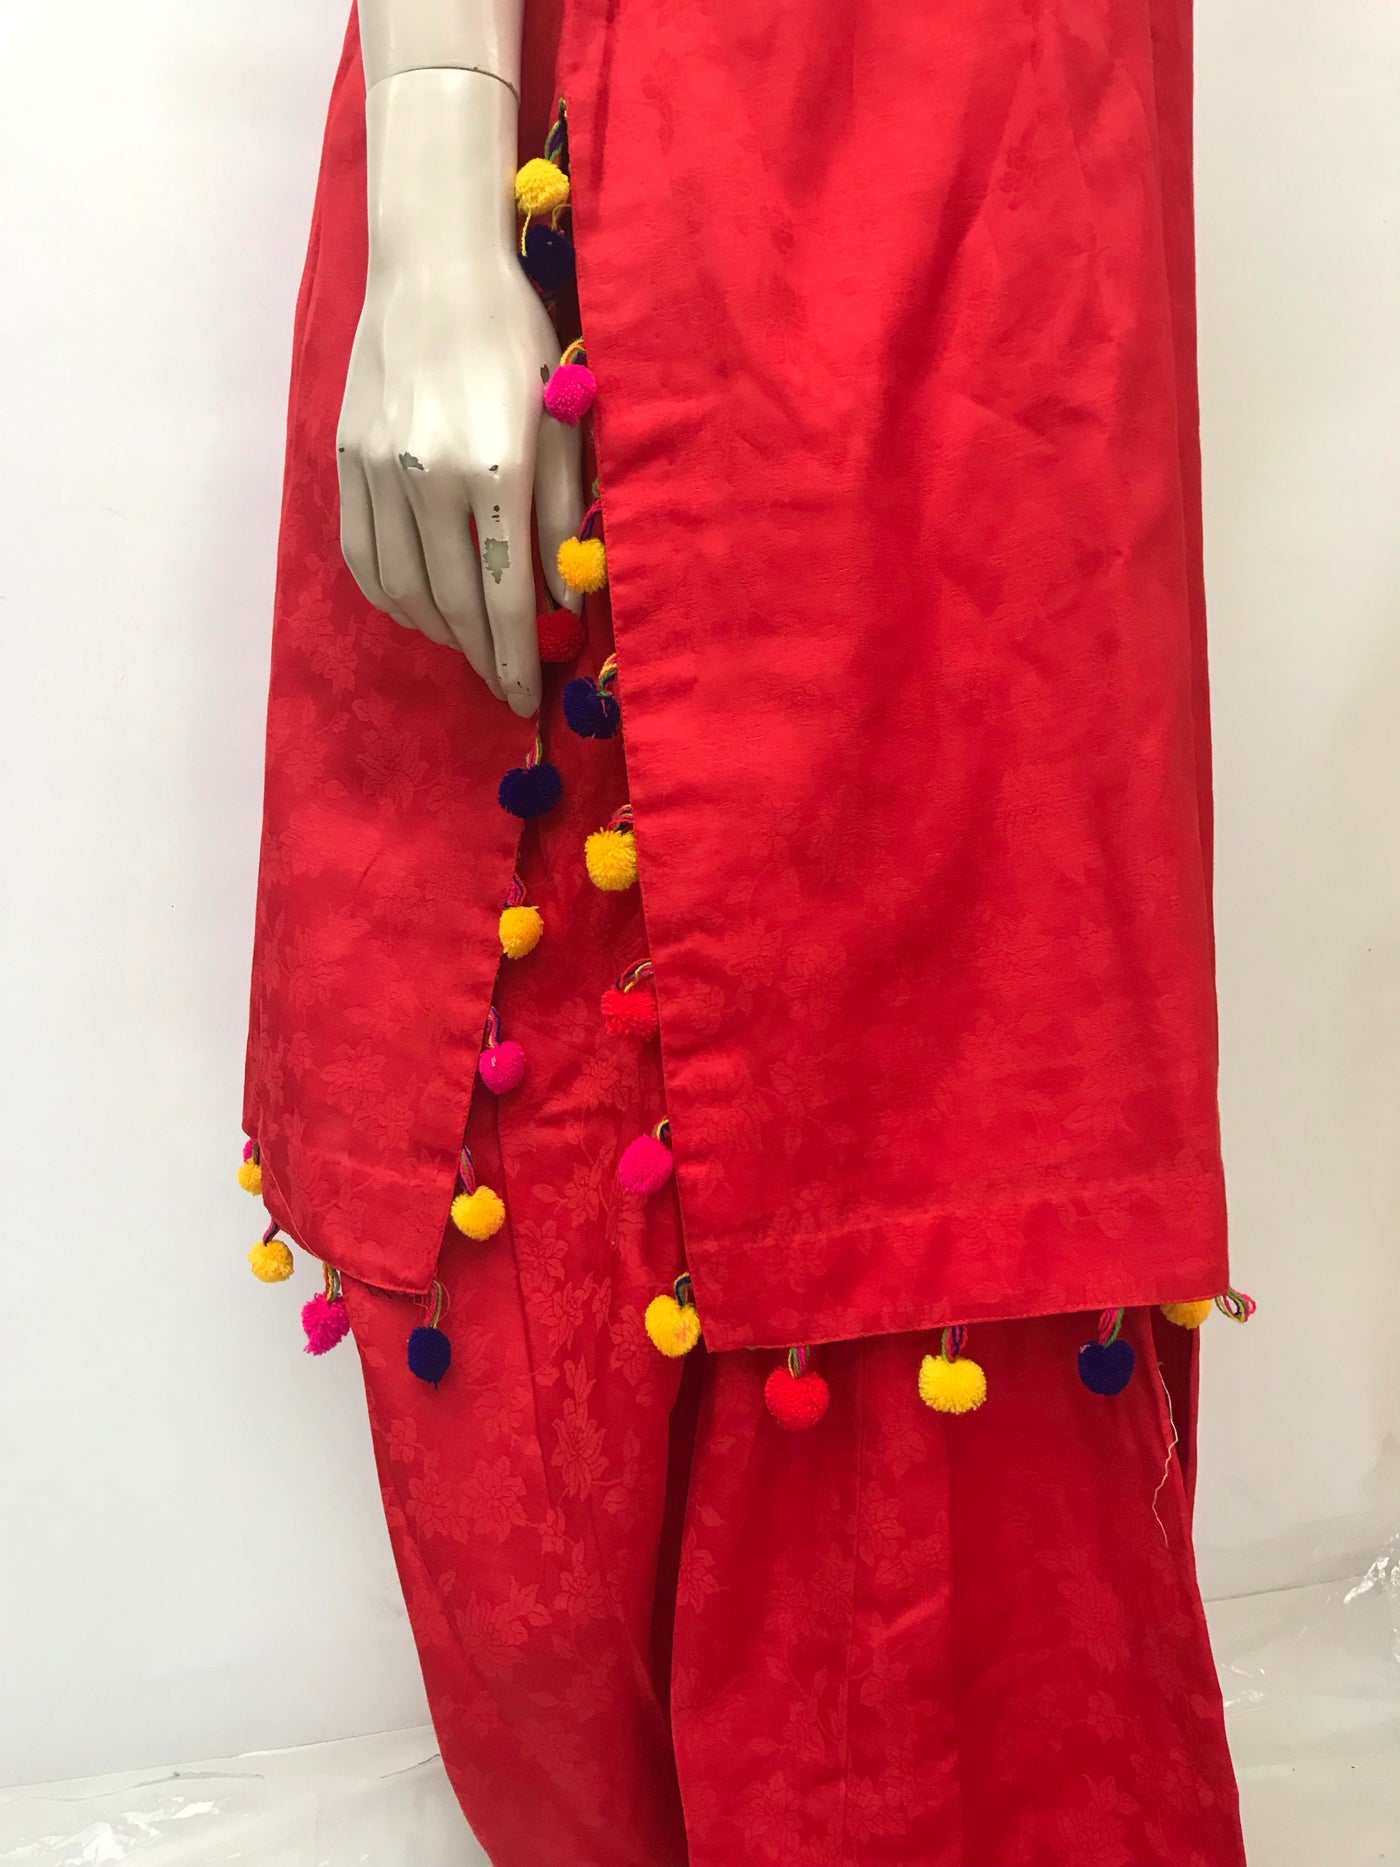 Phulkari Suit #punjabiwedding #phulkarisuits Rs 3800/- | Instagram